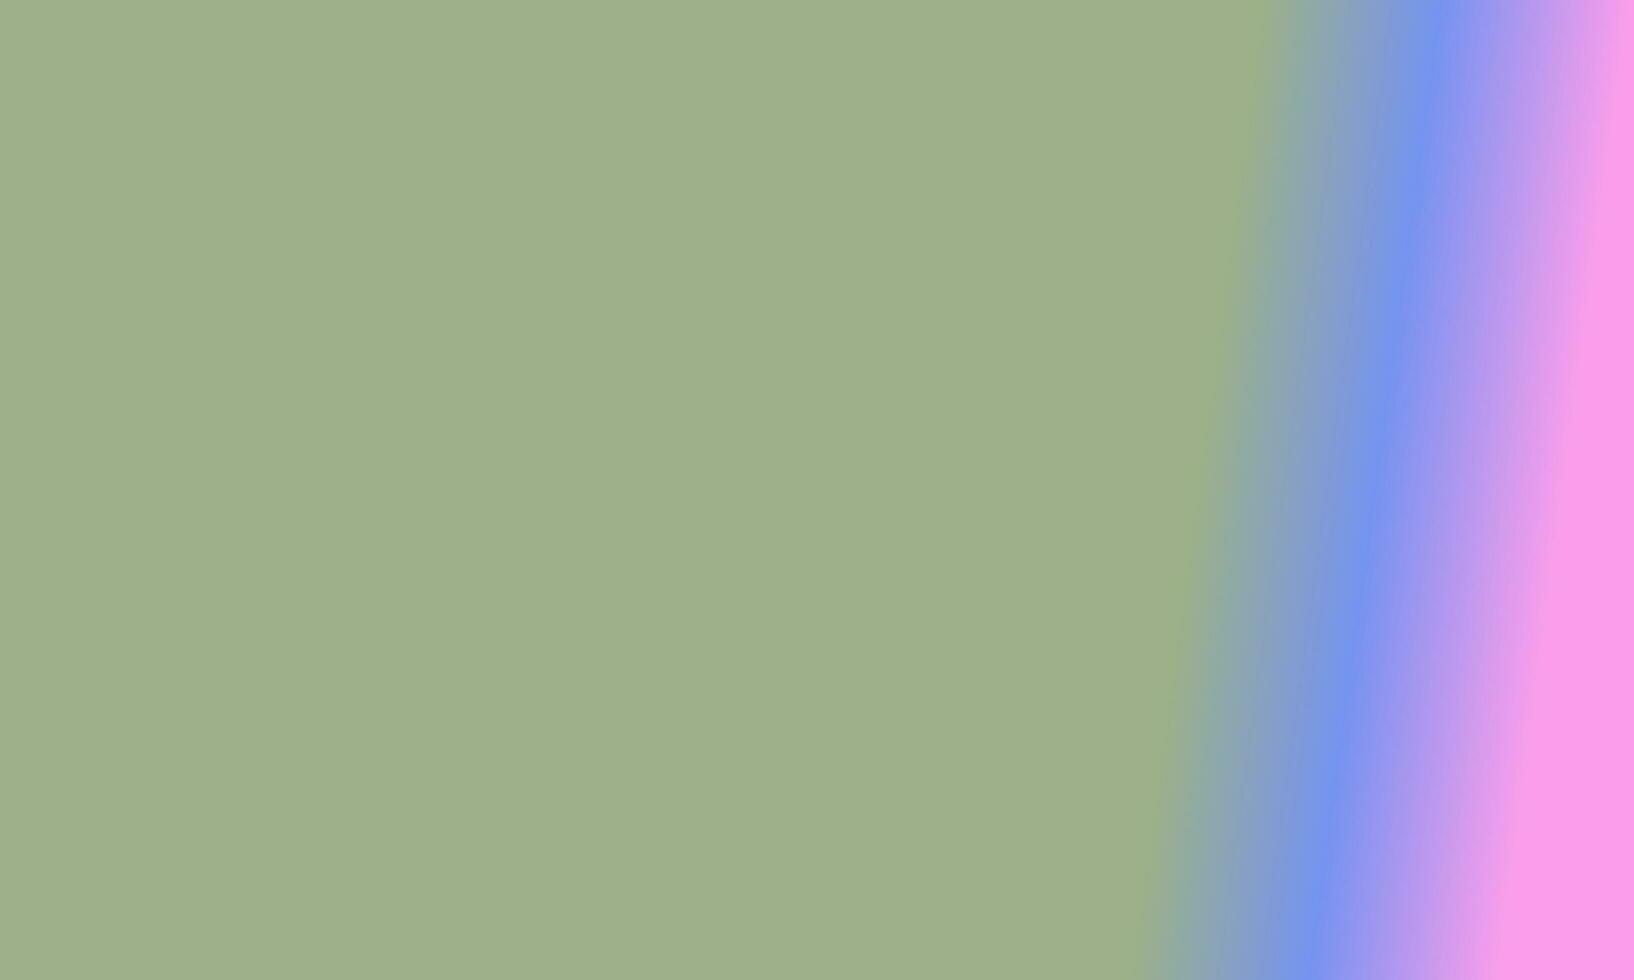 Design simple sage green,blue and pink gradient color illustration background photo